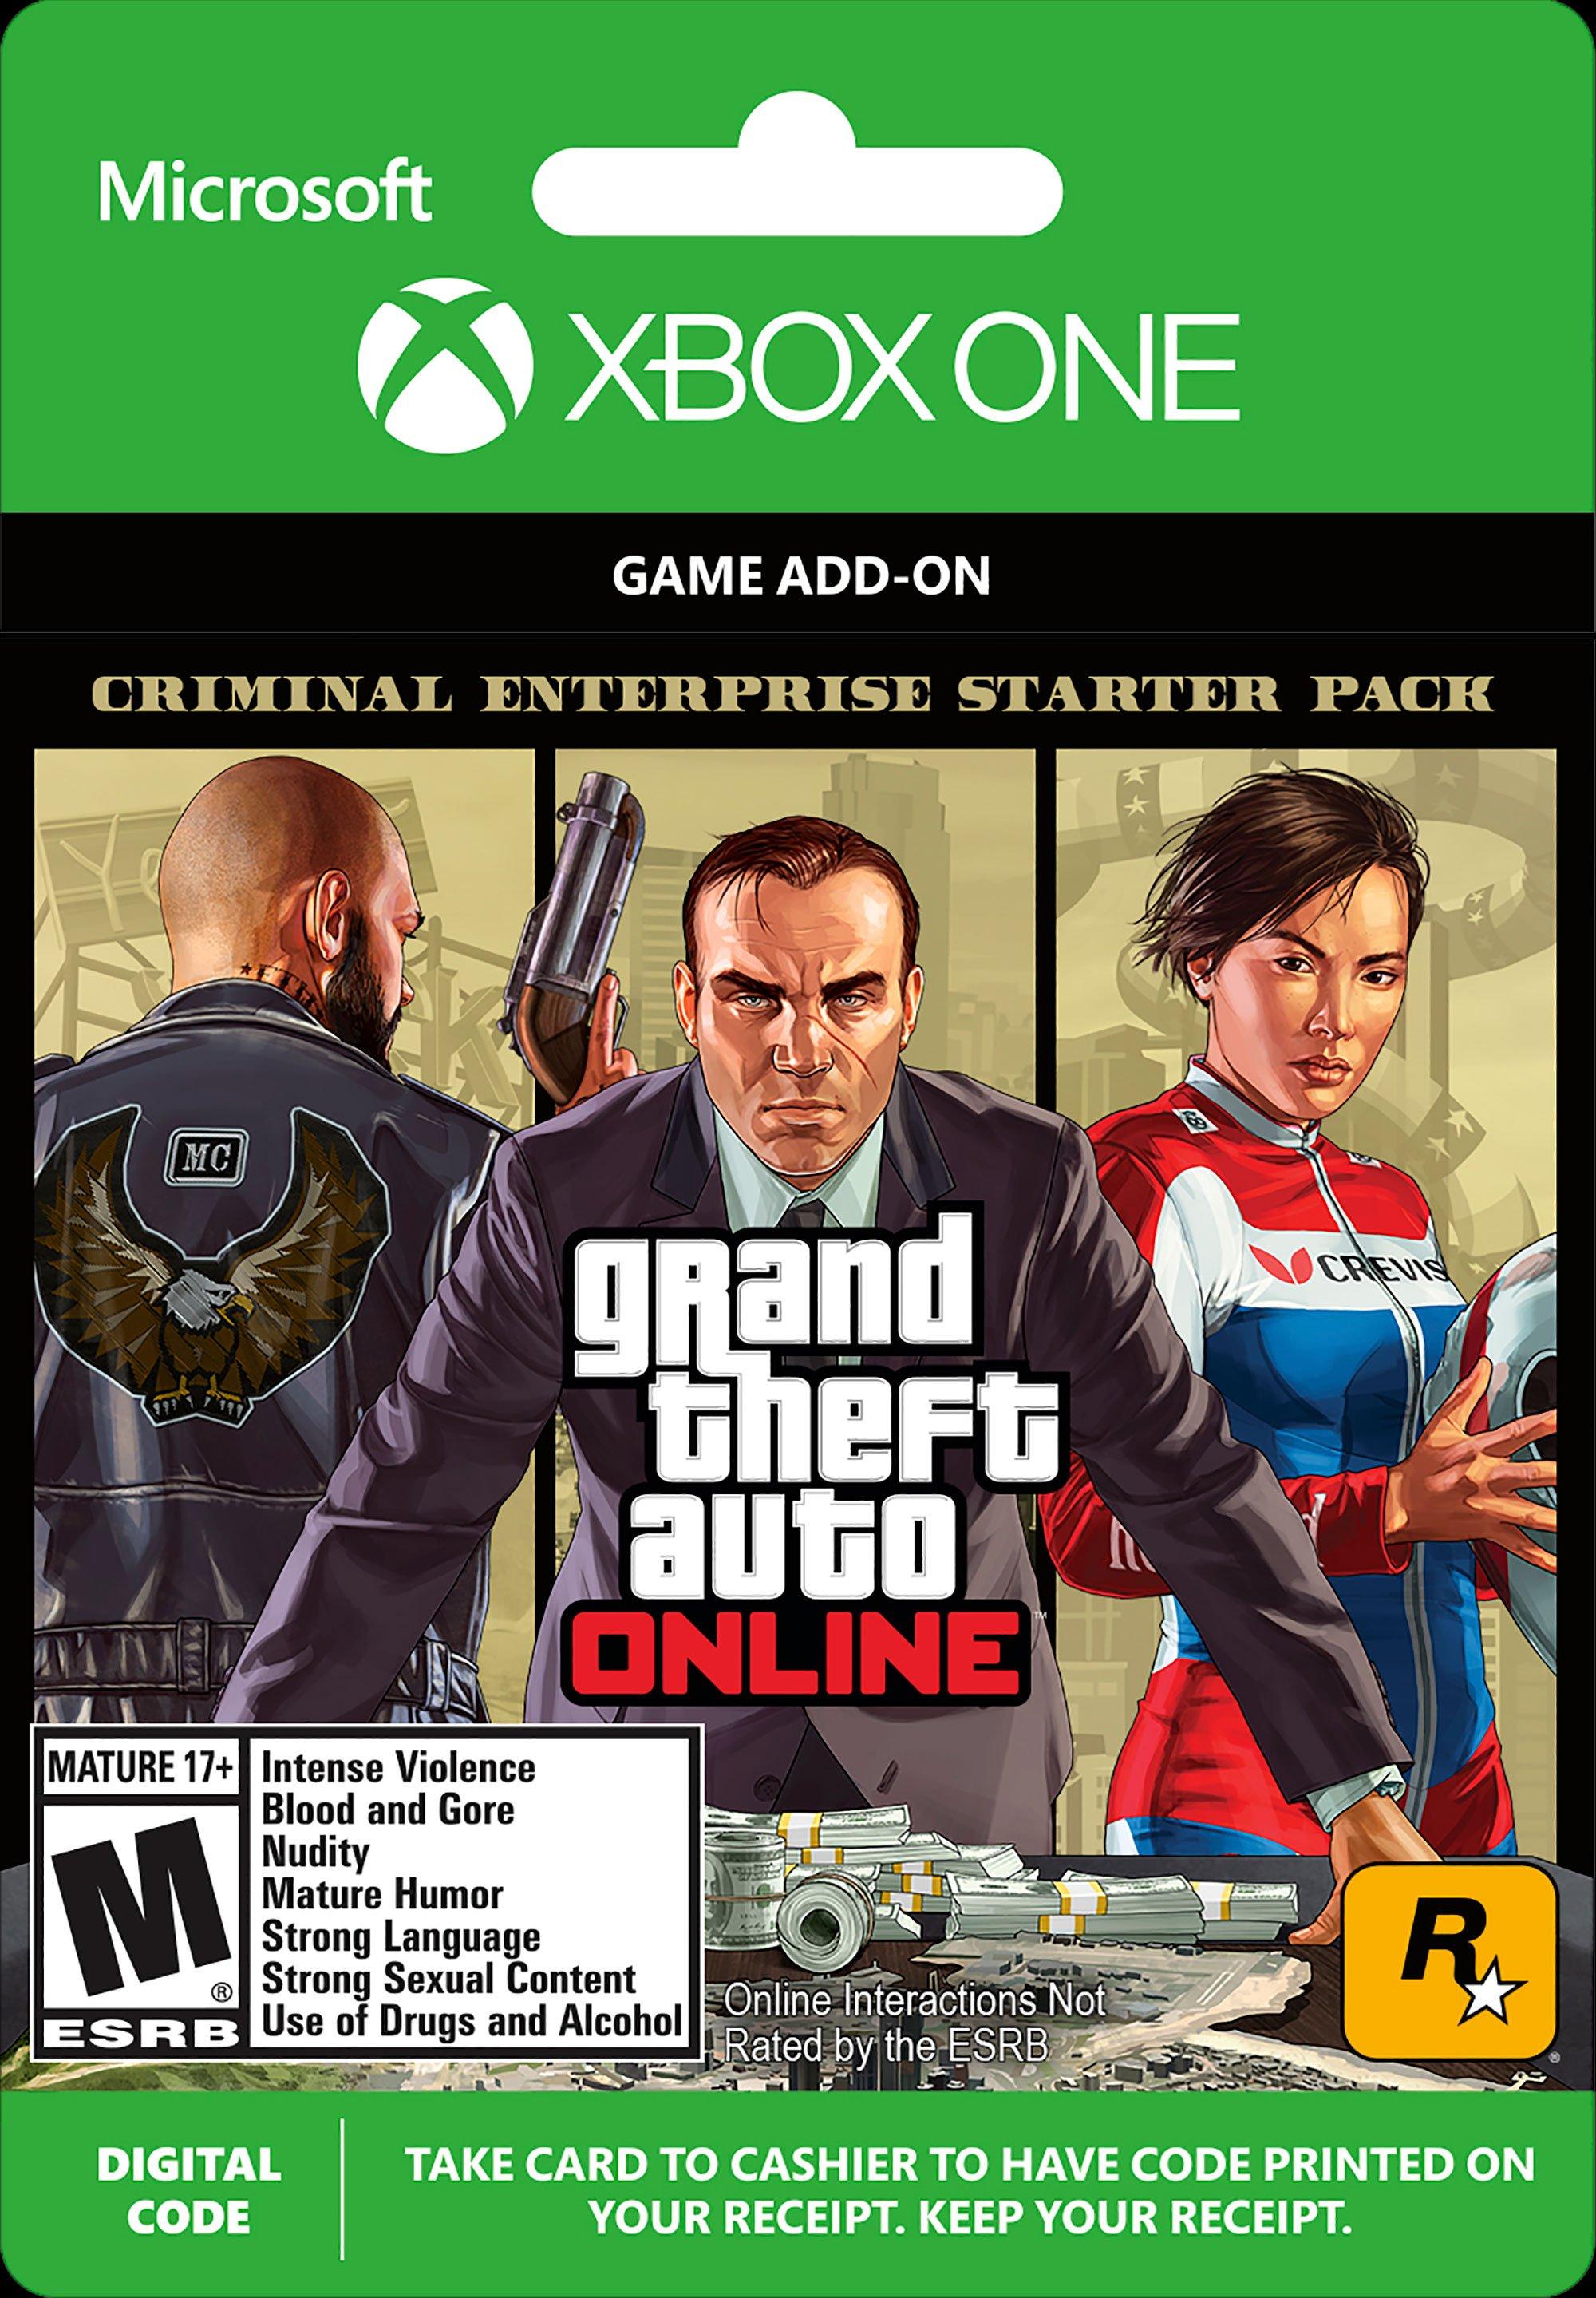 https://media.gamestop.com/i/gamestop/10156221/Grand-Theft-Auto-Online-Criminal-Enterprise-Starter-Pack?$thumb$